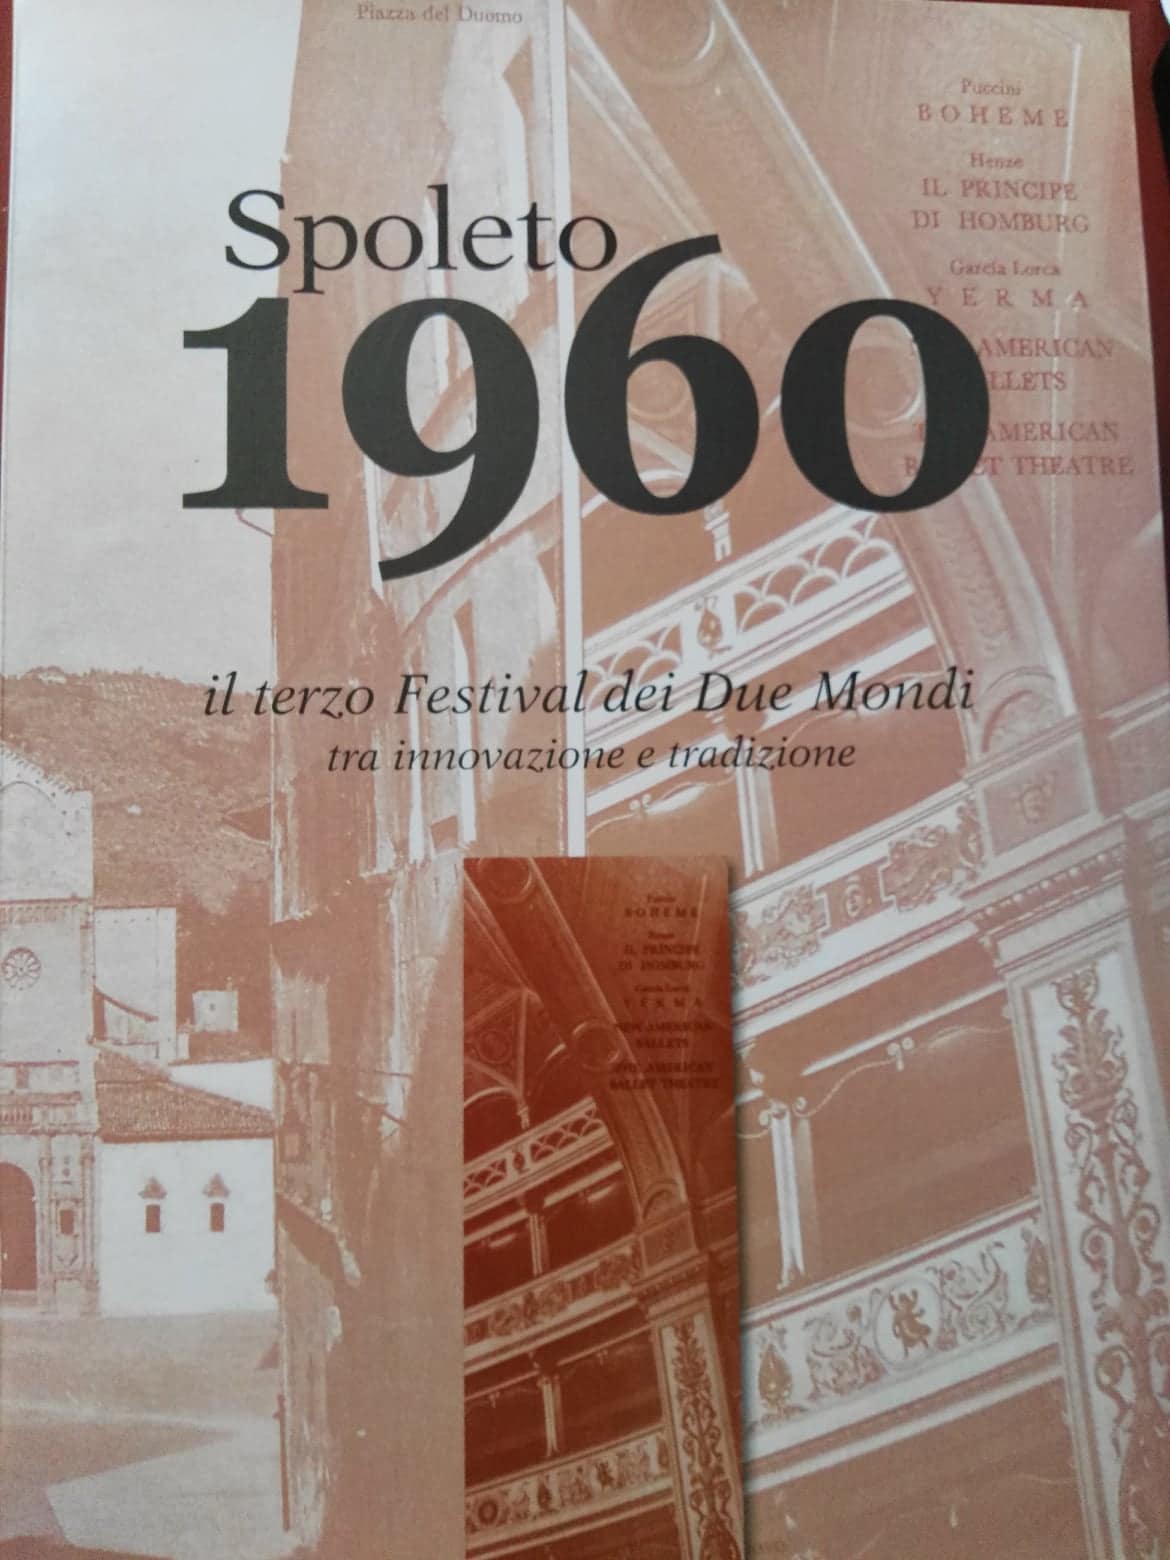 copertina volume Spoleto 1960 Il terzo Festival dei Due Mondi